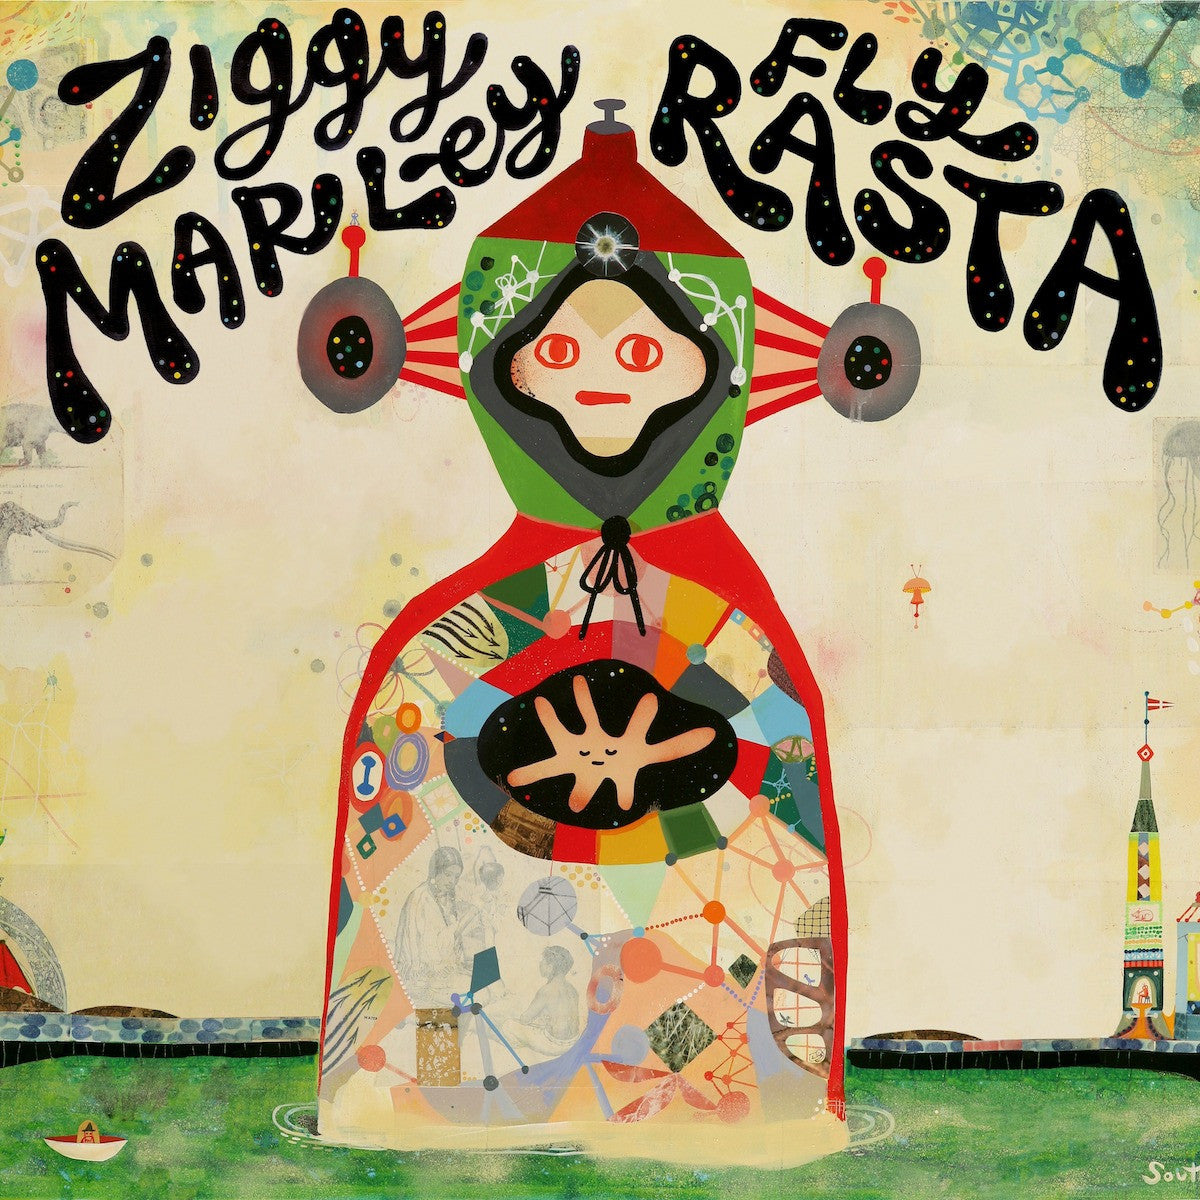 Marley, Ziggy - Fly Rasta